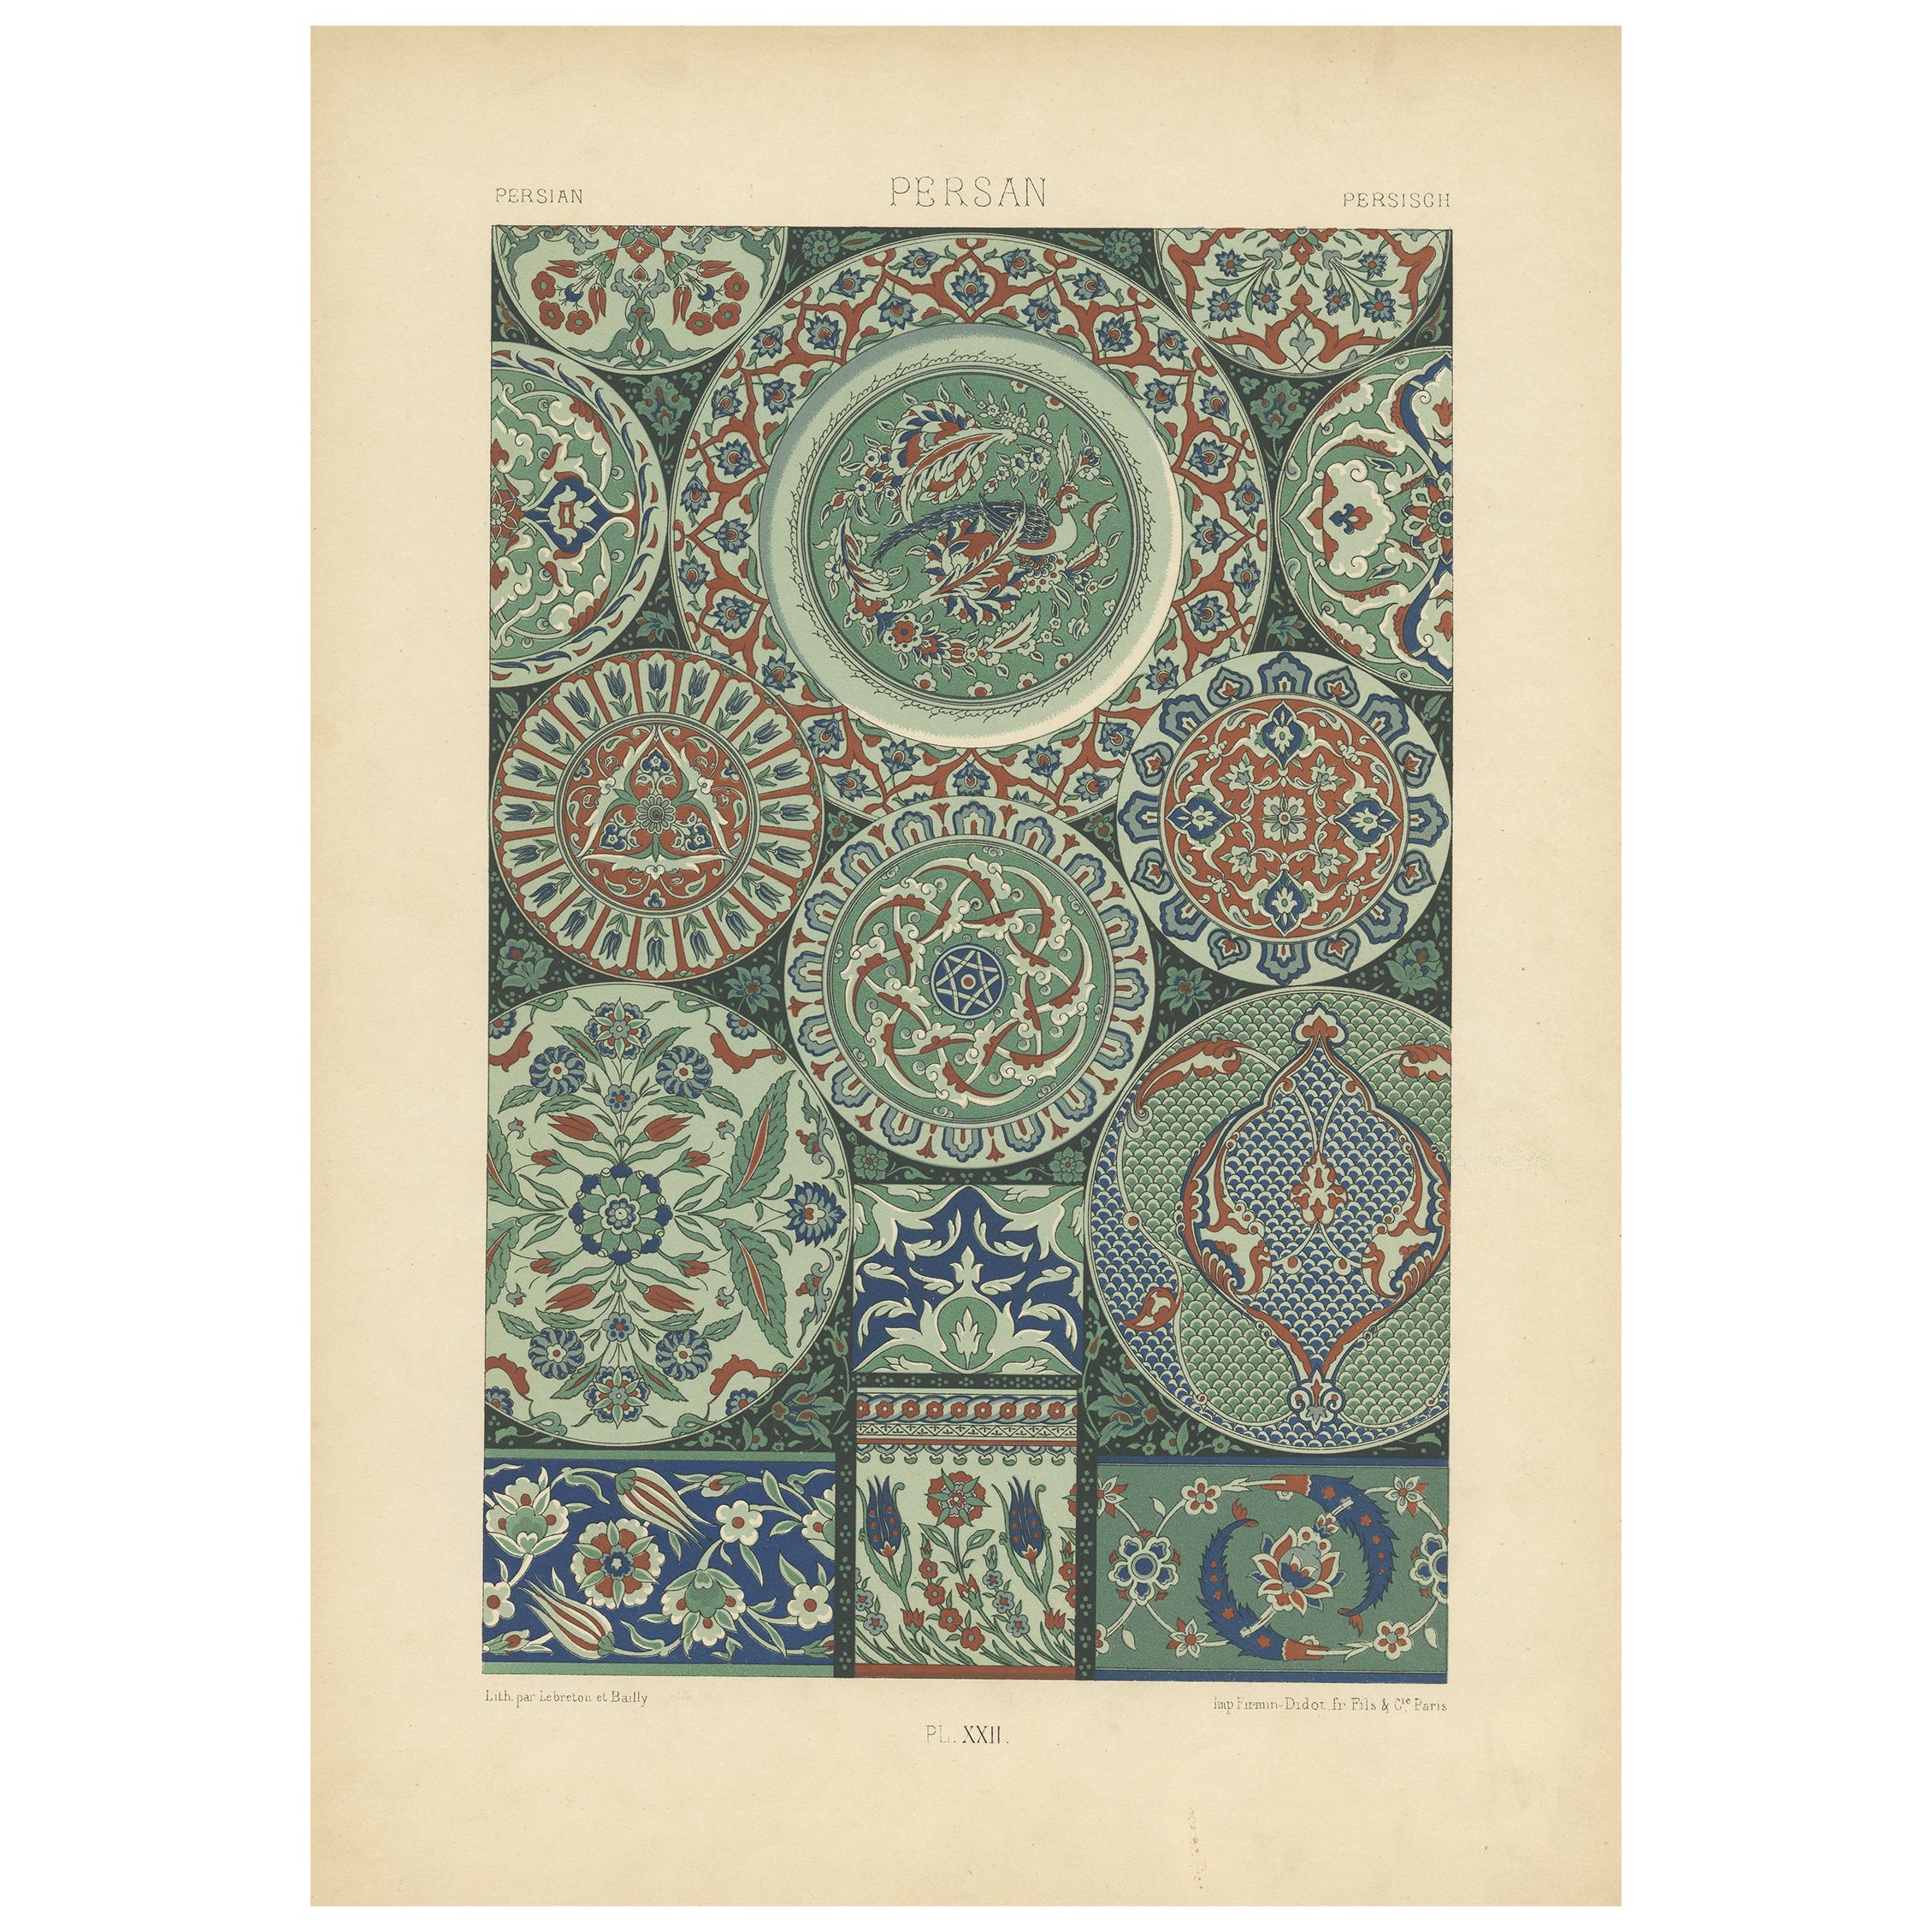 Original Antique Print of Persian Decorative Art, 1869